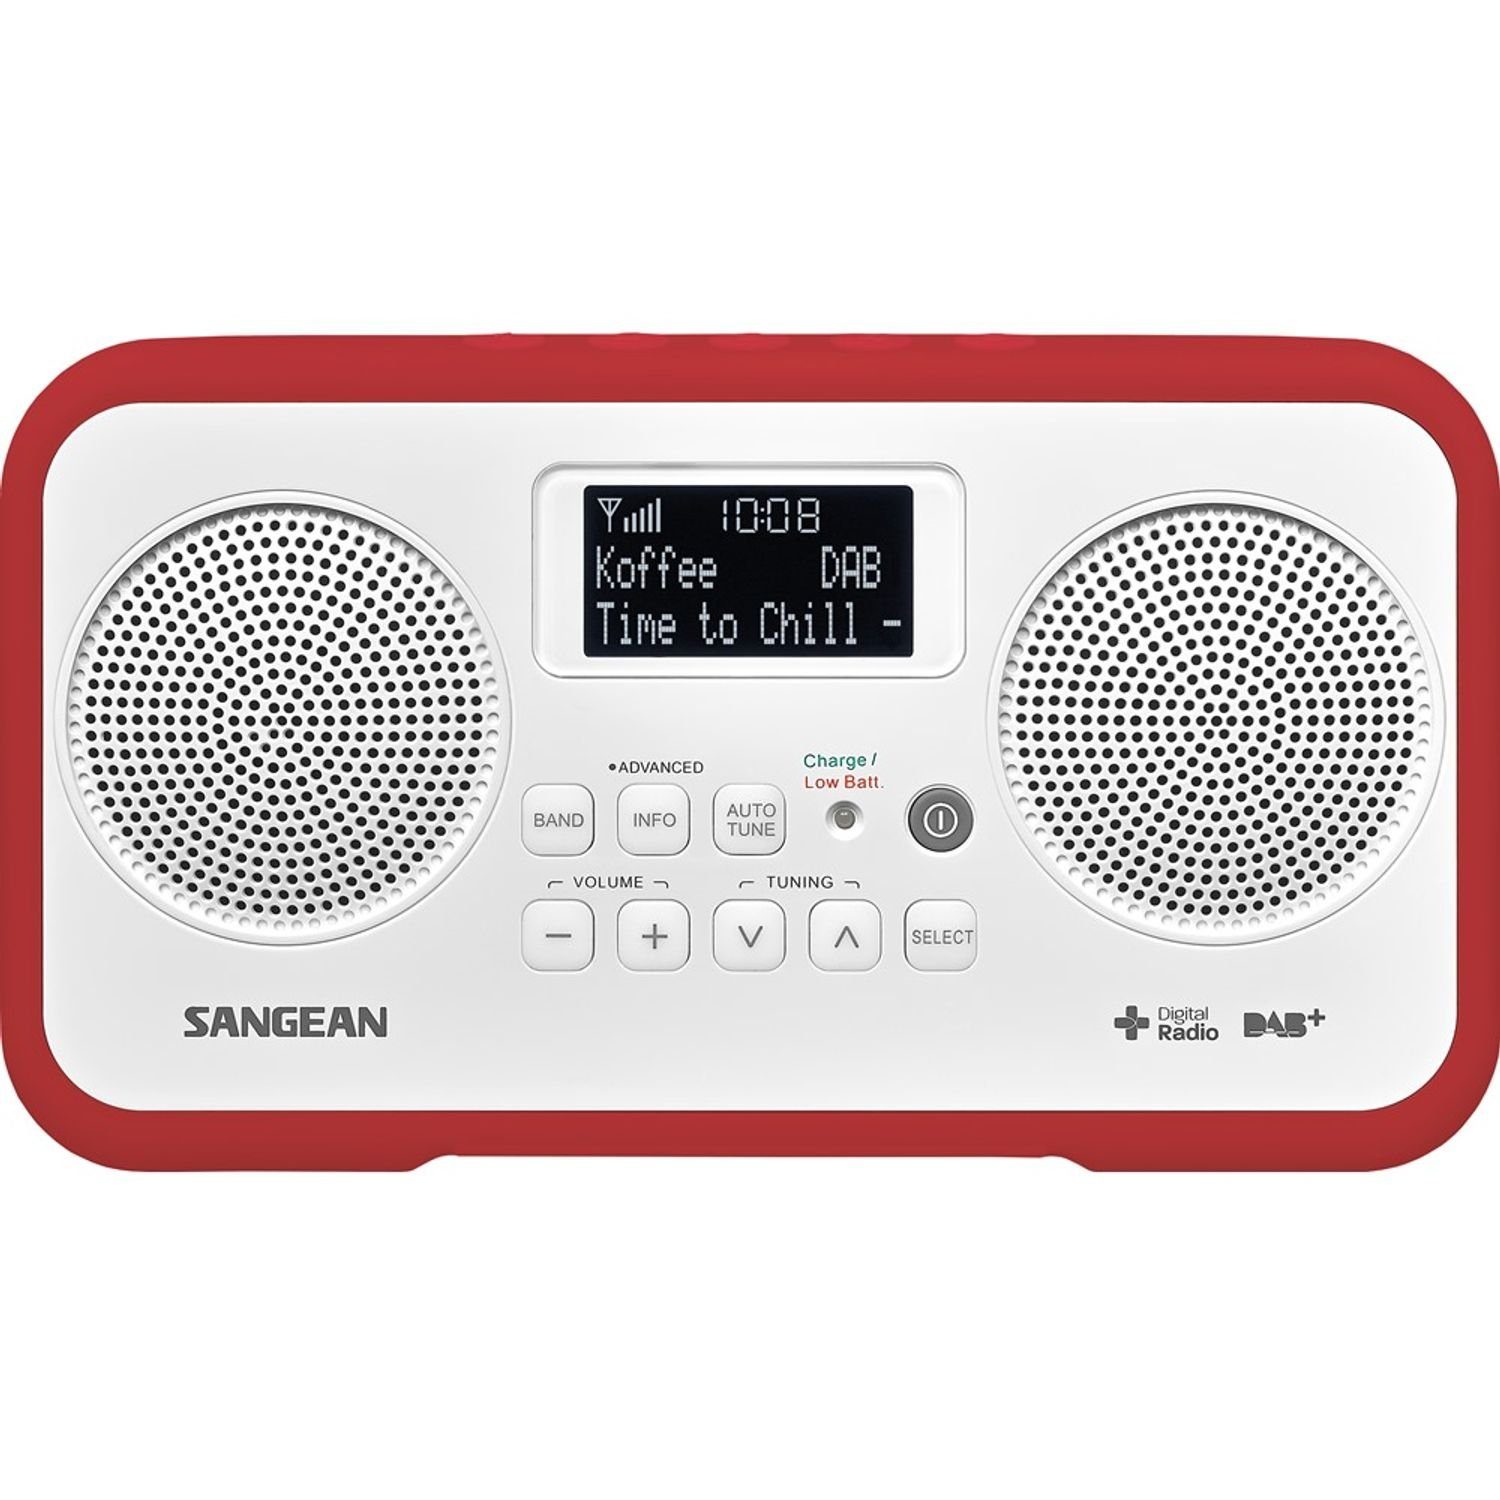 (DAB) Stereo-Empfänger digitaler Sangean Digitalradio (DAB) weiß/rot DPR-77 DAB+